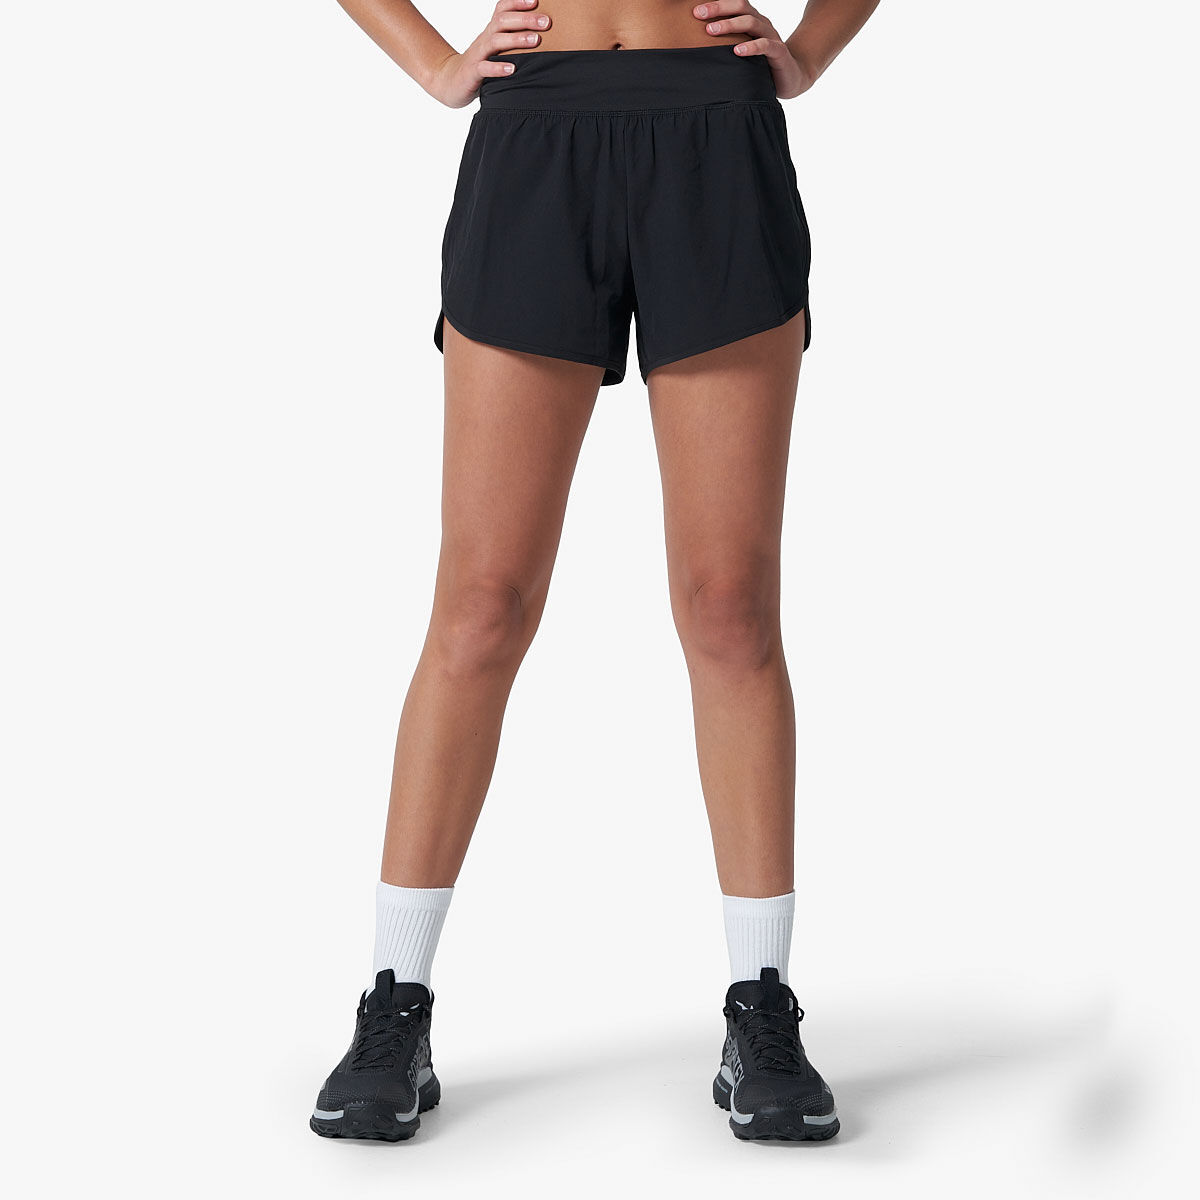 Ell/Voo Womens Essentials 5 Inch Shorts Black XL